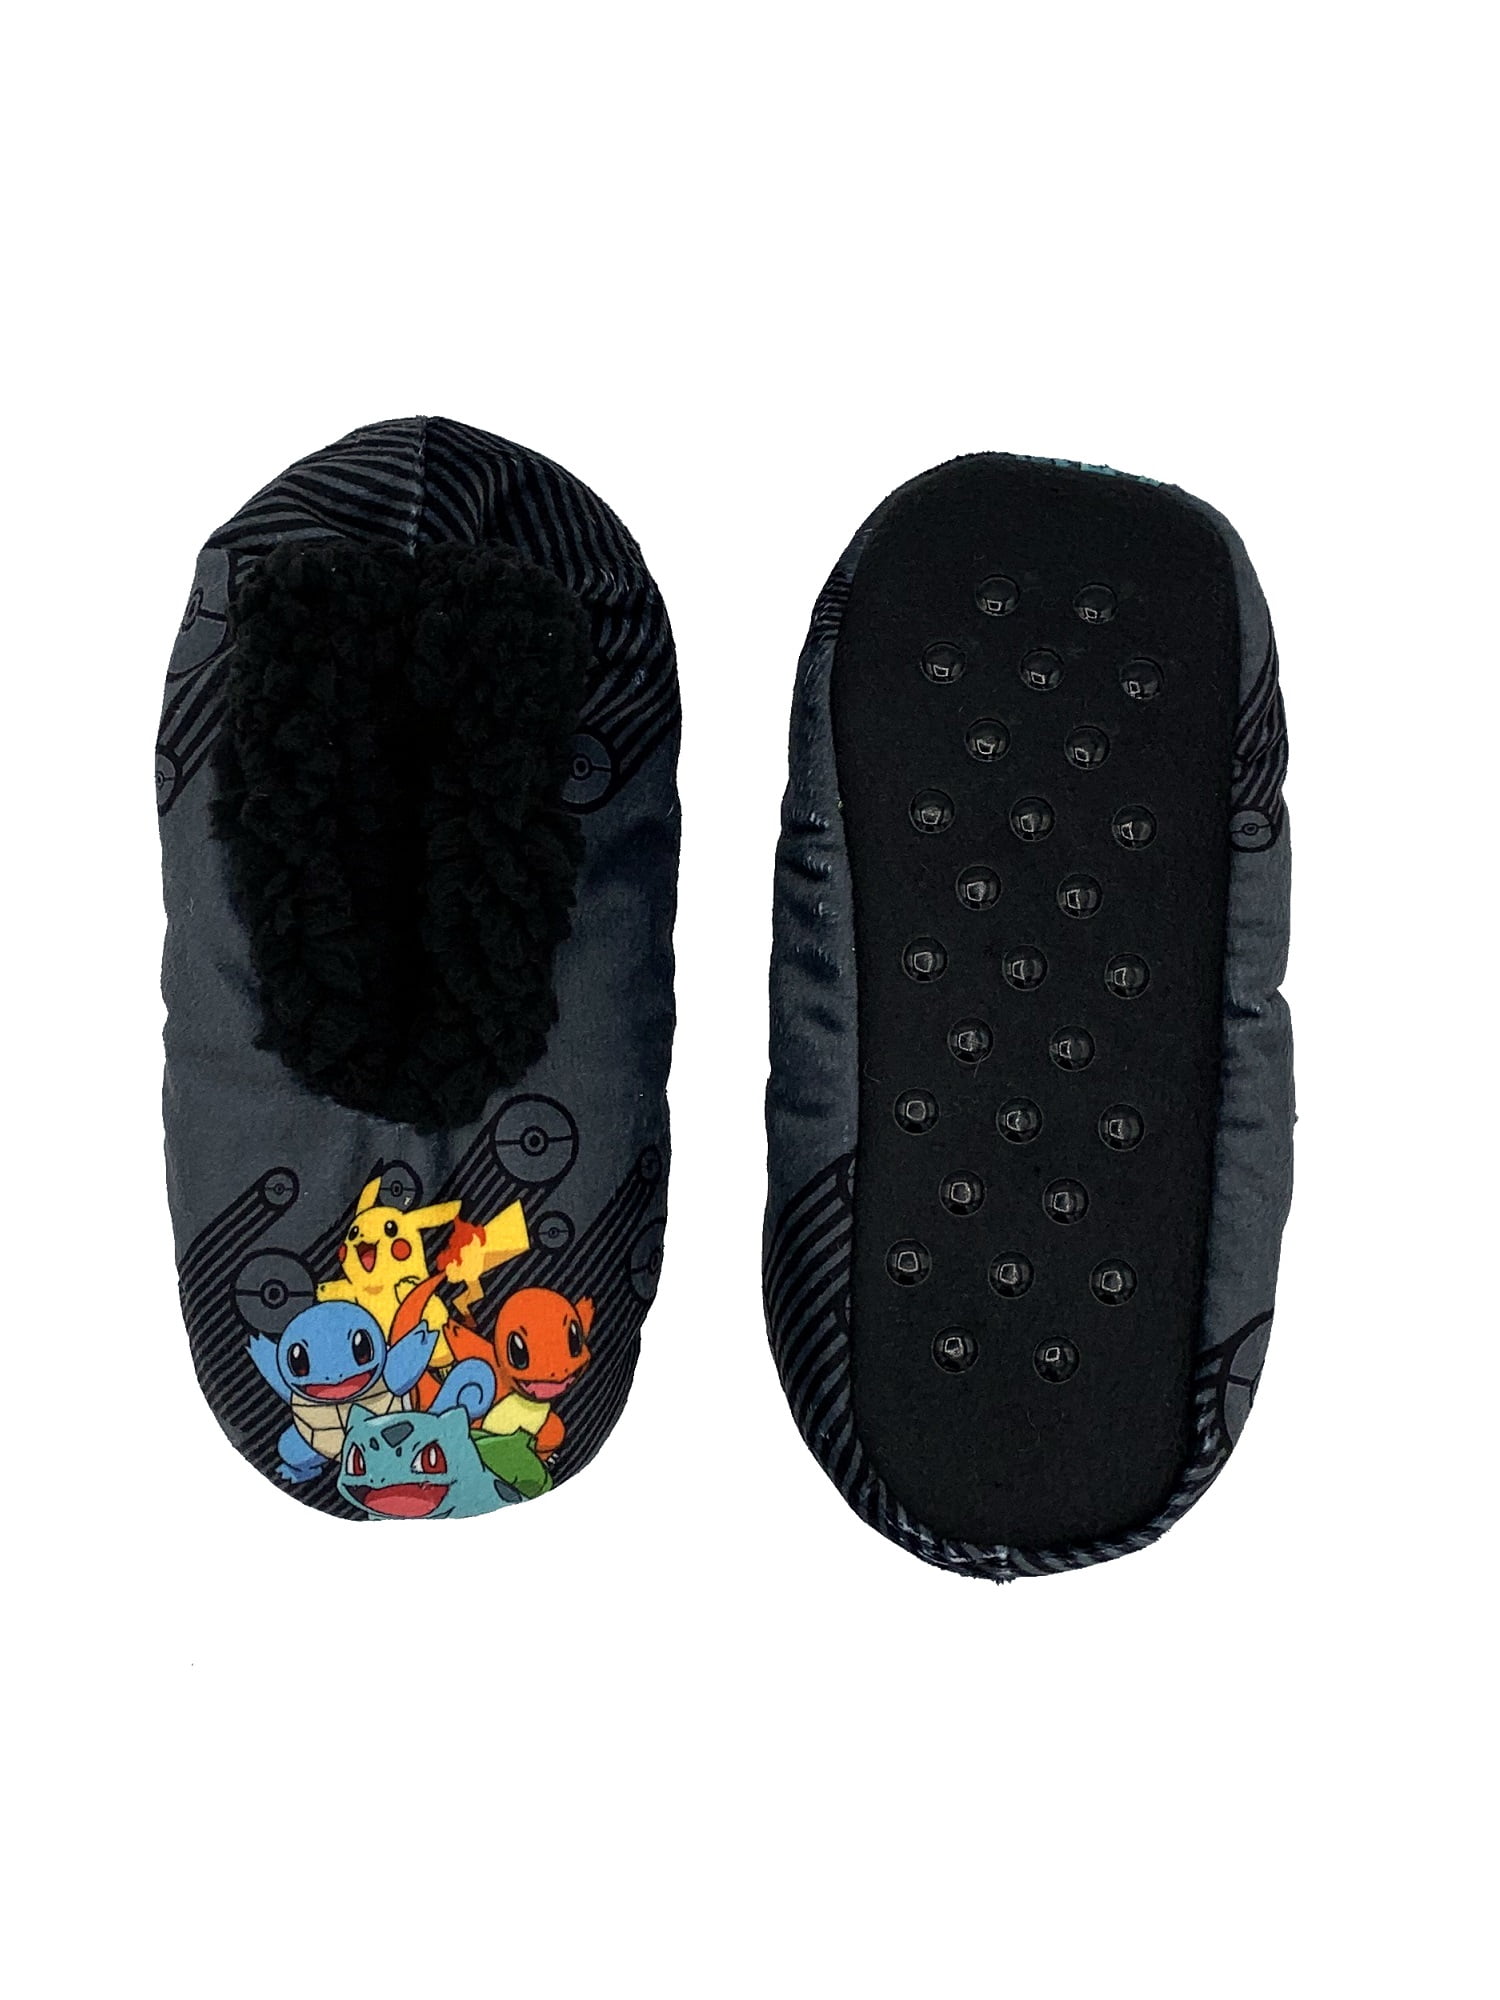 Pokéball Slippers - Yarn Punk®